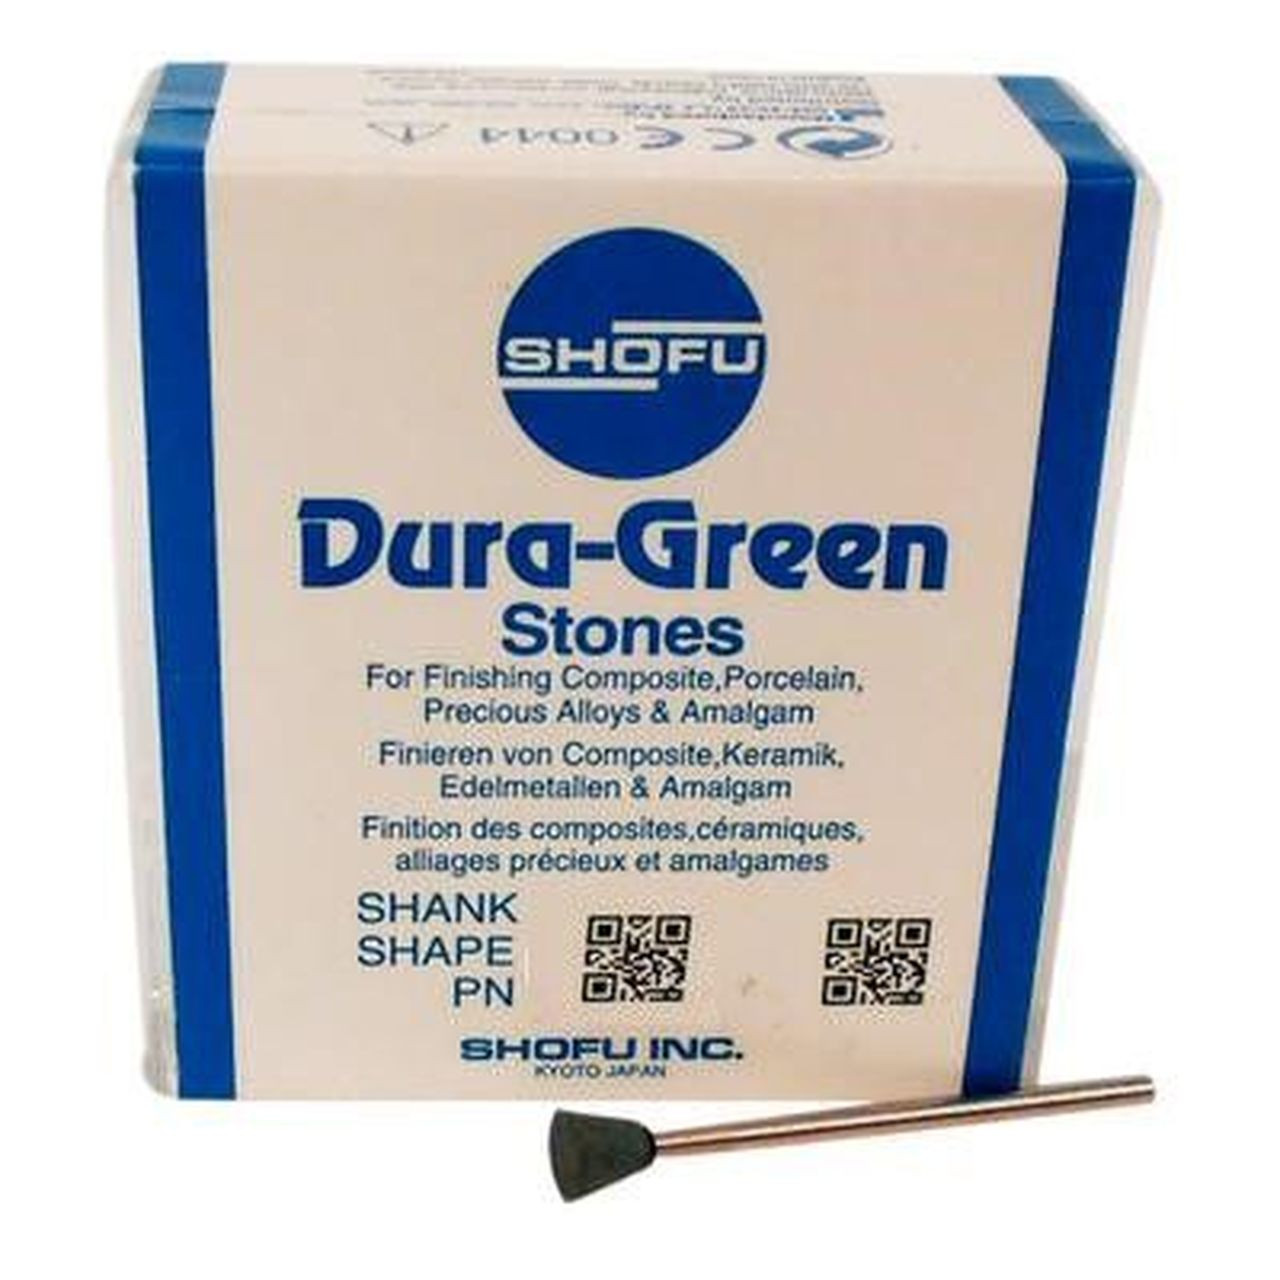 Shofu Dura-Green Stones FG, FL2, 12/pk